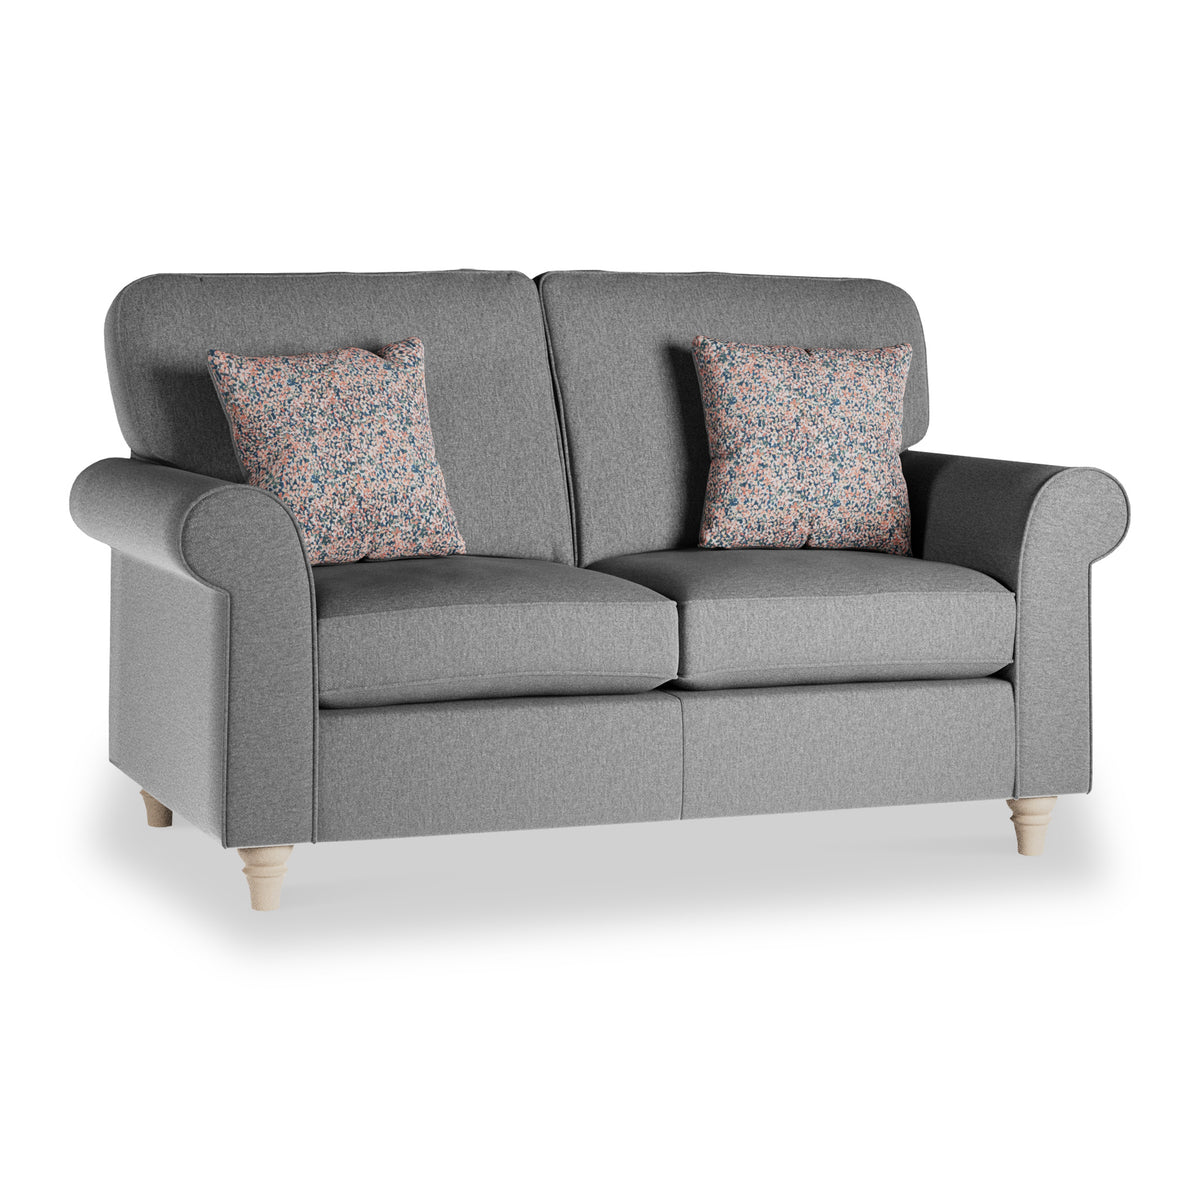 Thomas Grey 2 Seater Sofa from Roseland Furniture